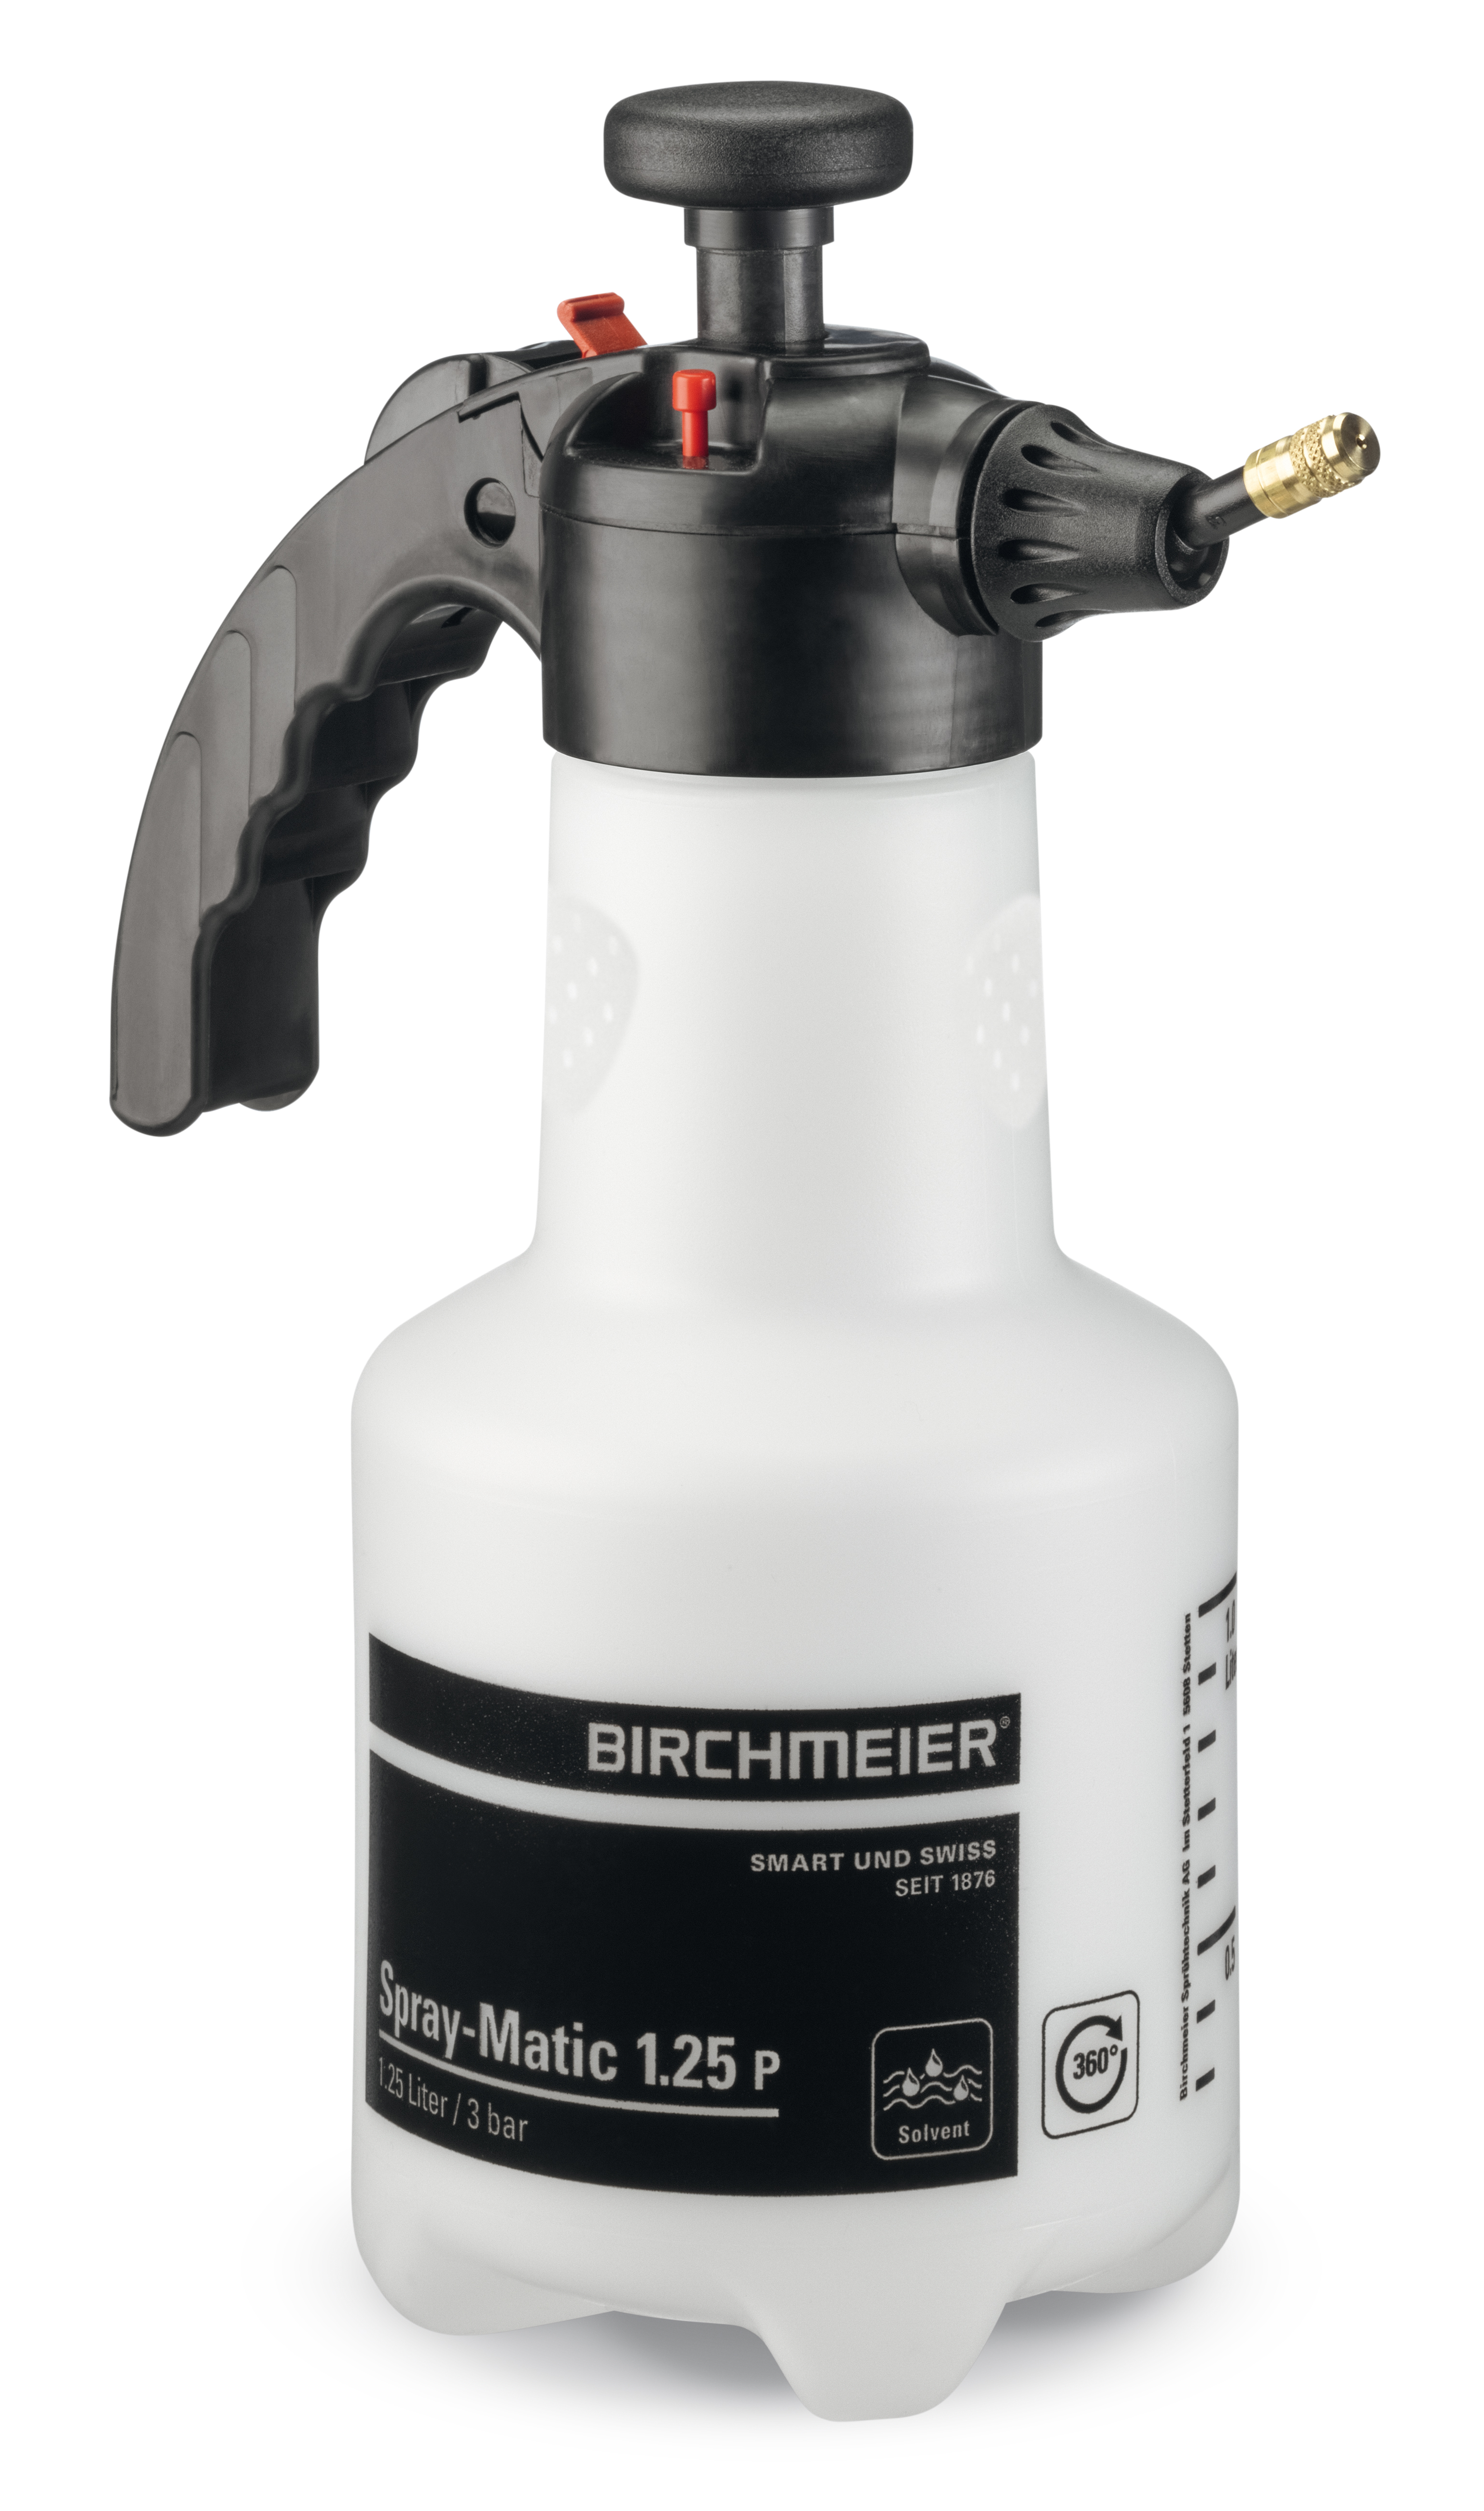 Birchmeier - Super-Matic 1.25 P Sprühgerät